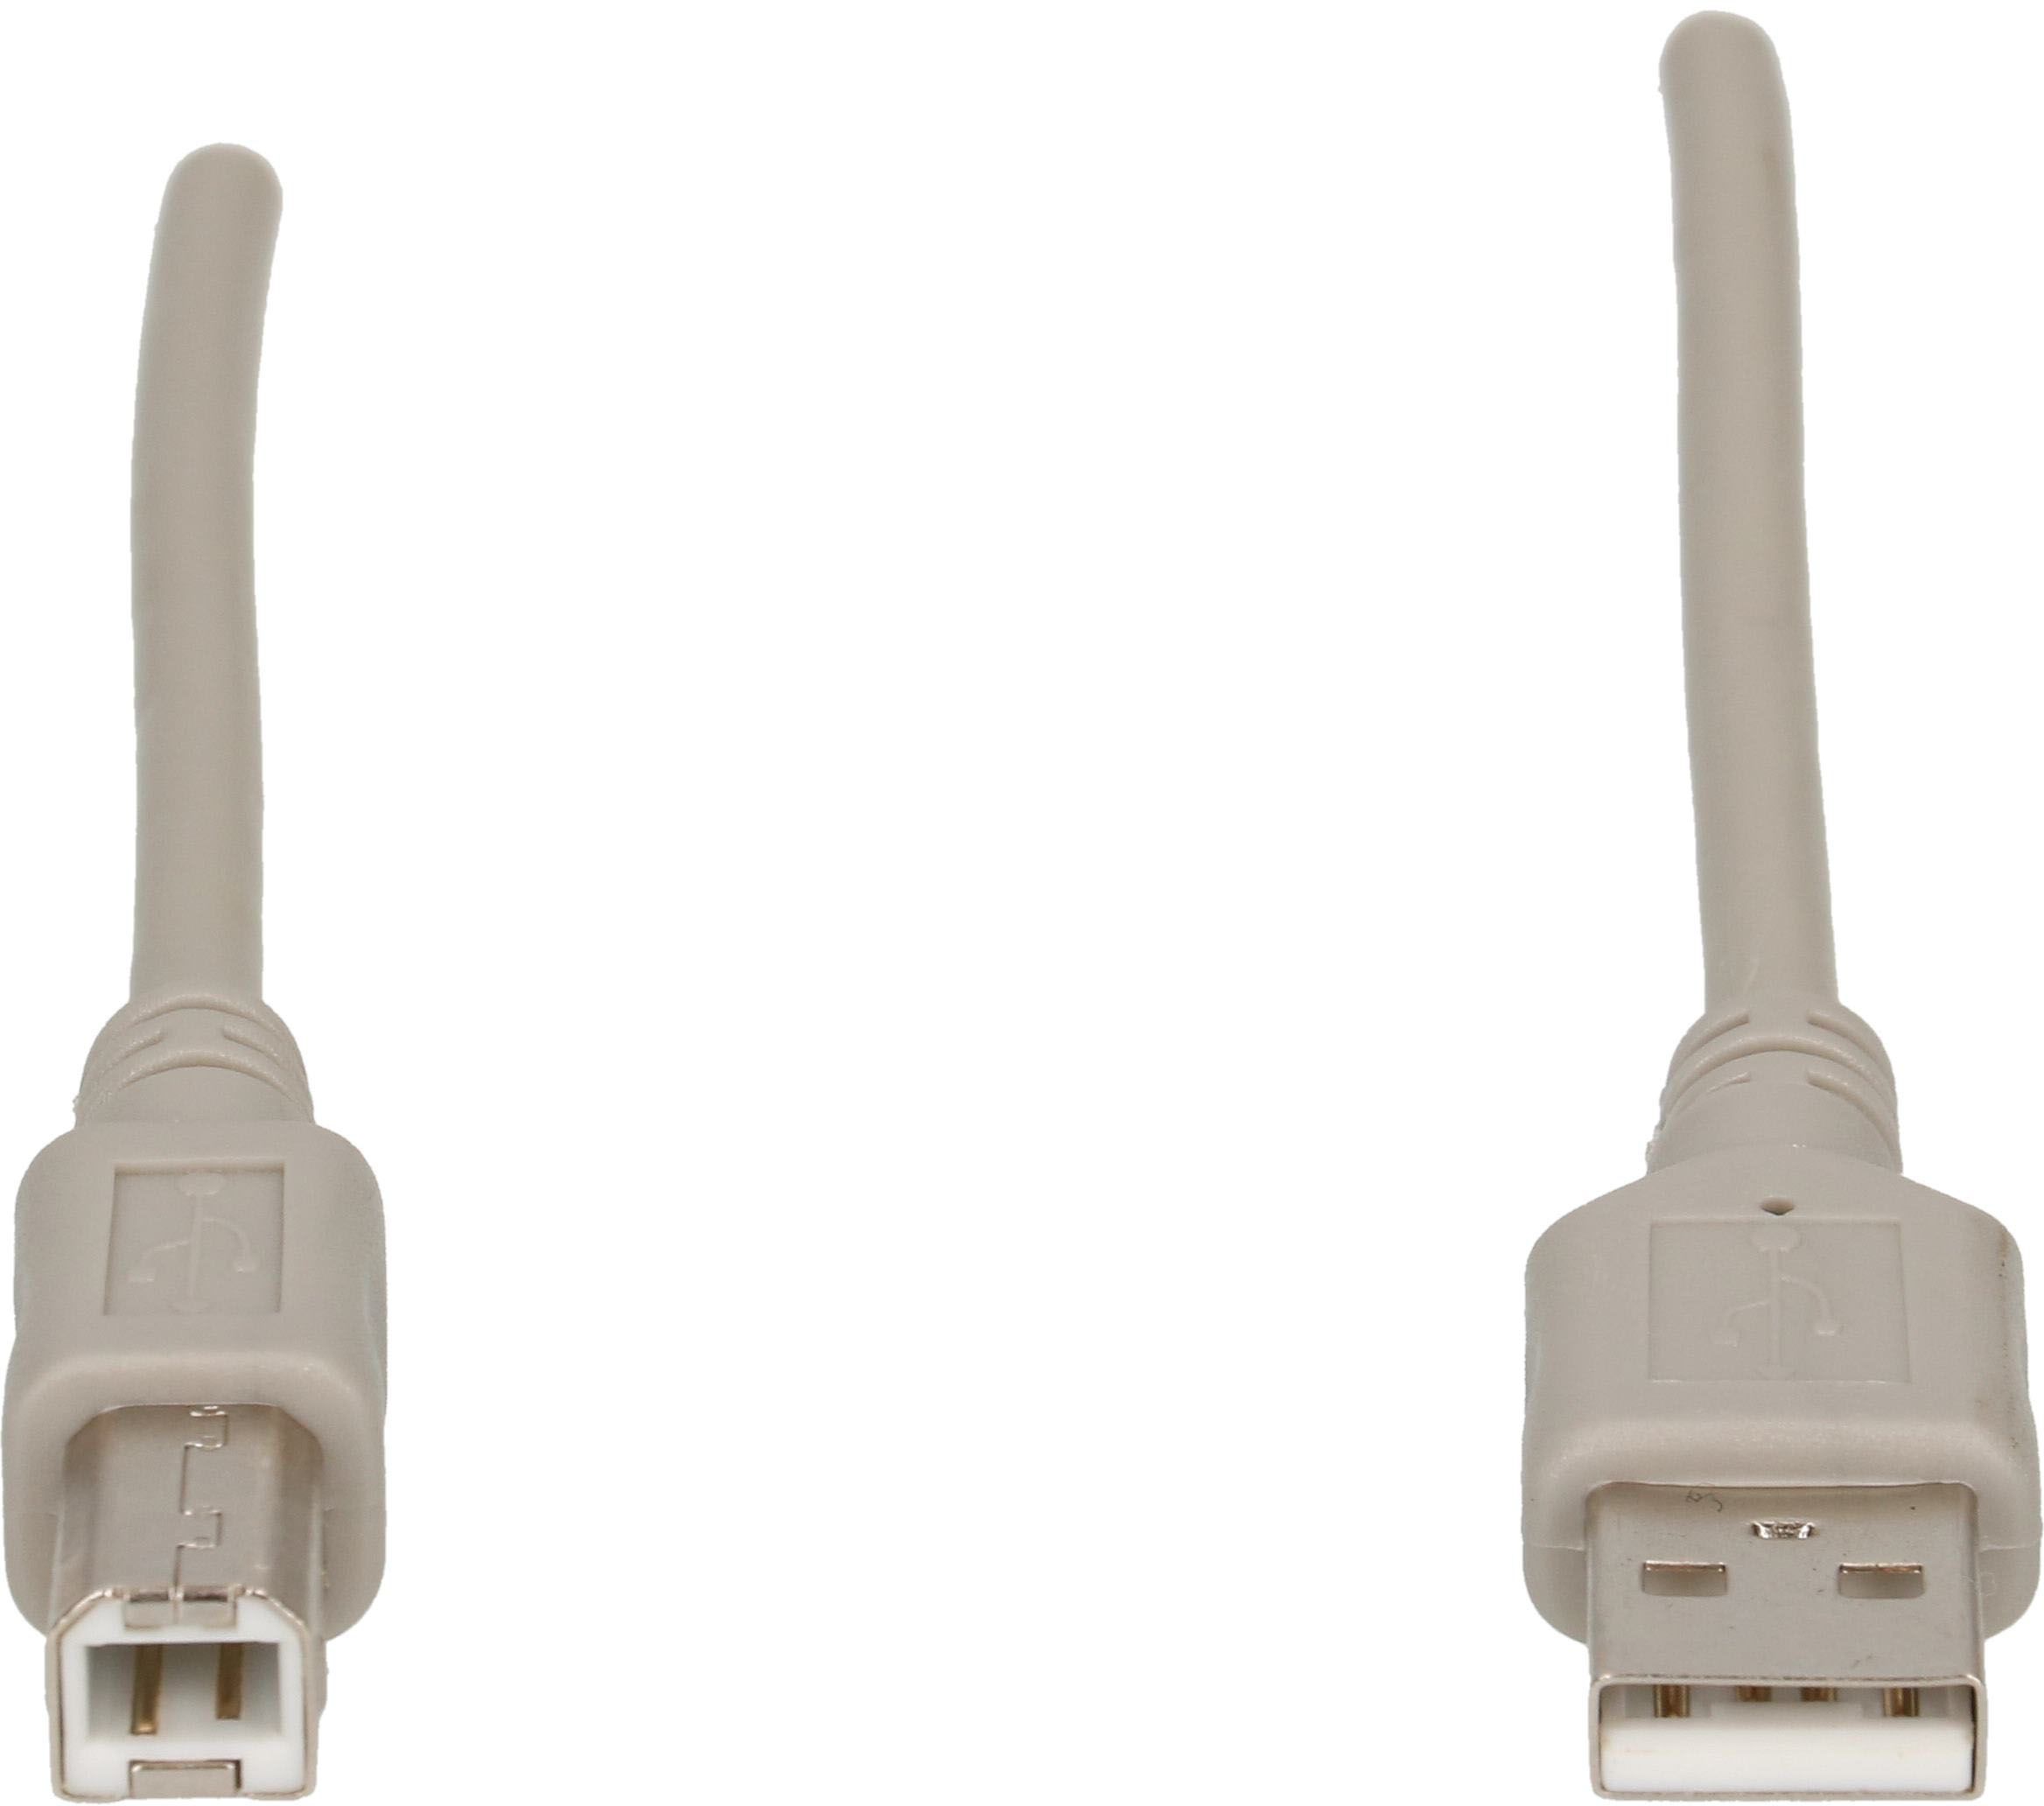 USB Kabel Version 2.0 1.5m grau